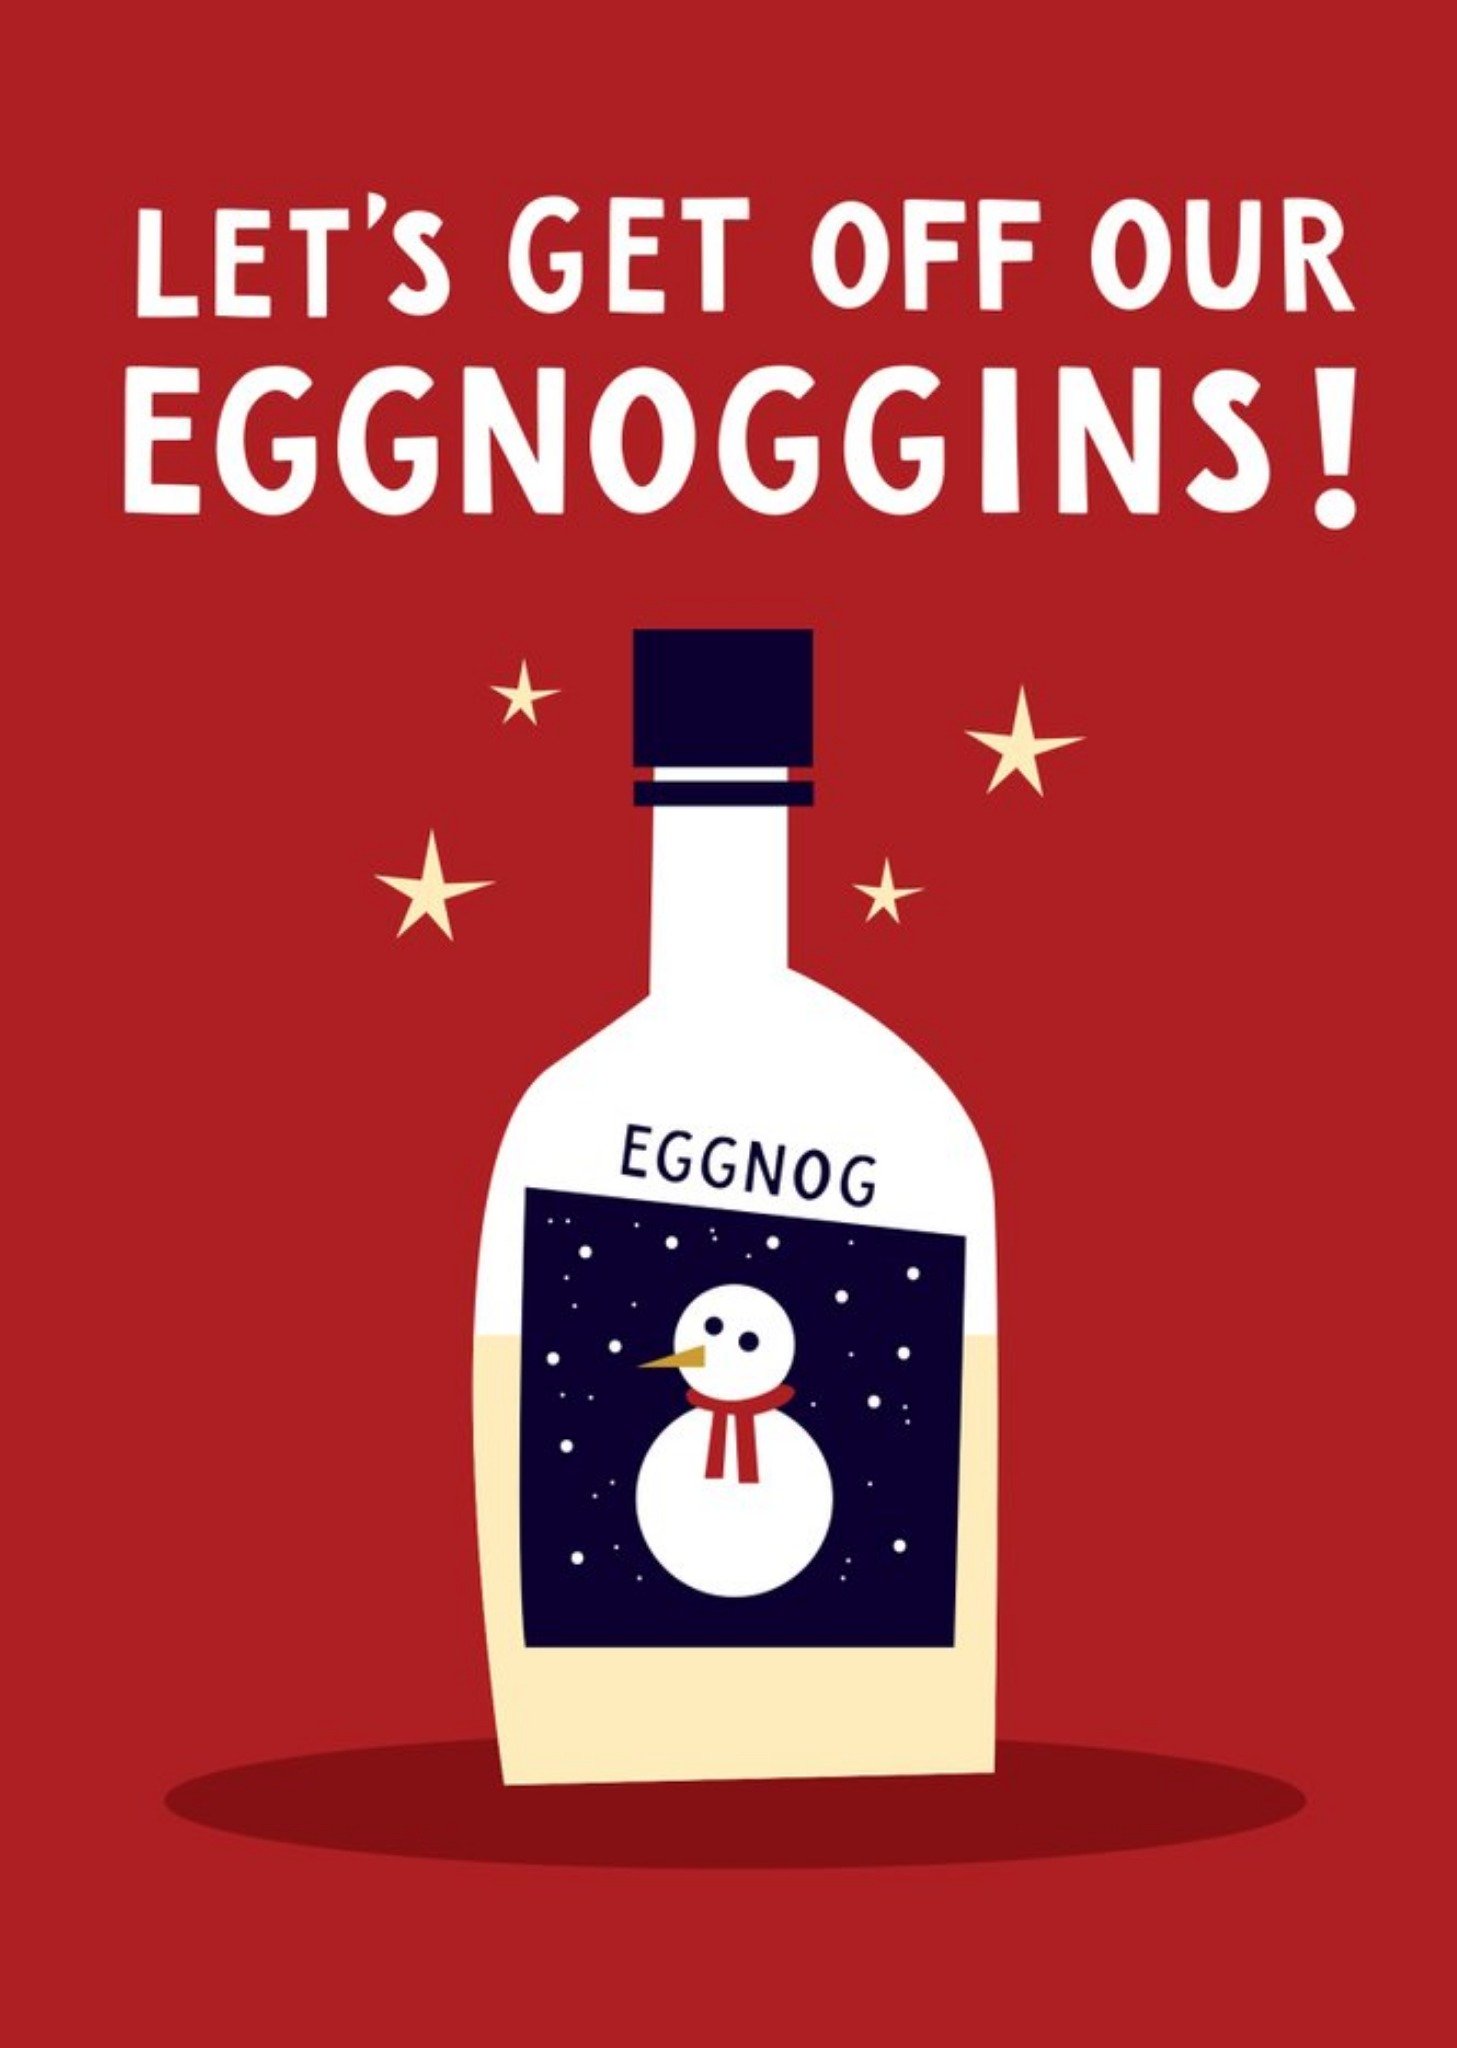 Moonpig Fun Illustrative Egg Nog Christmas Card Ecard